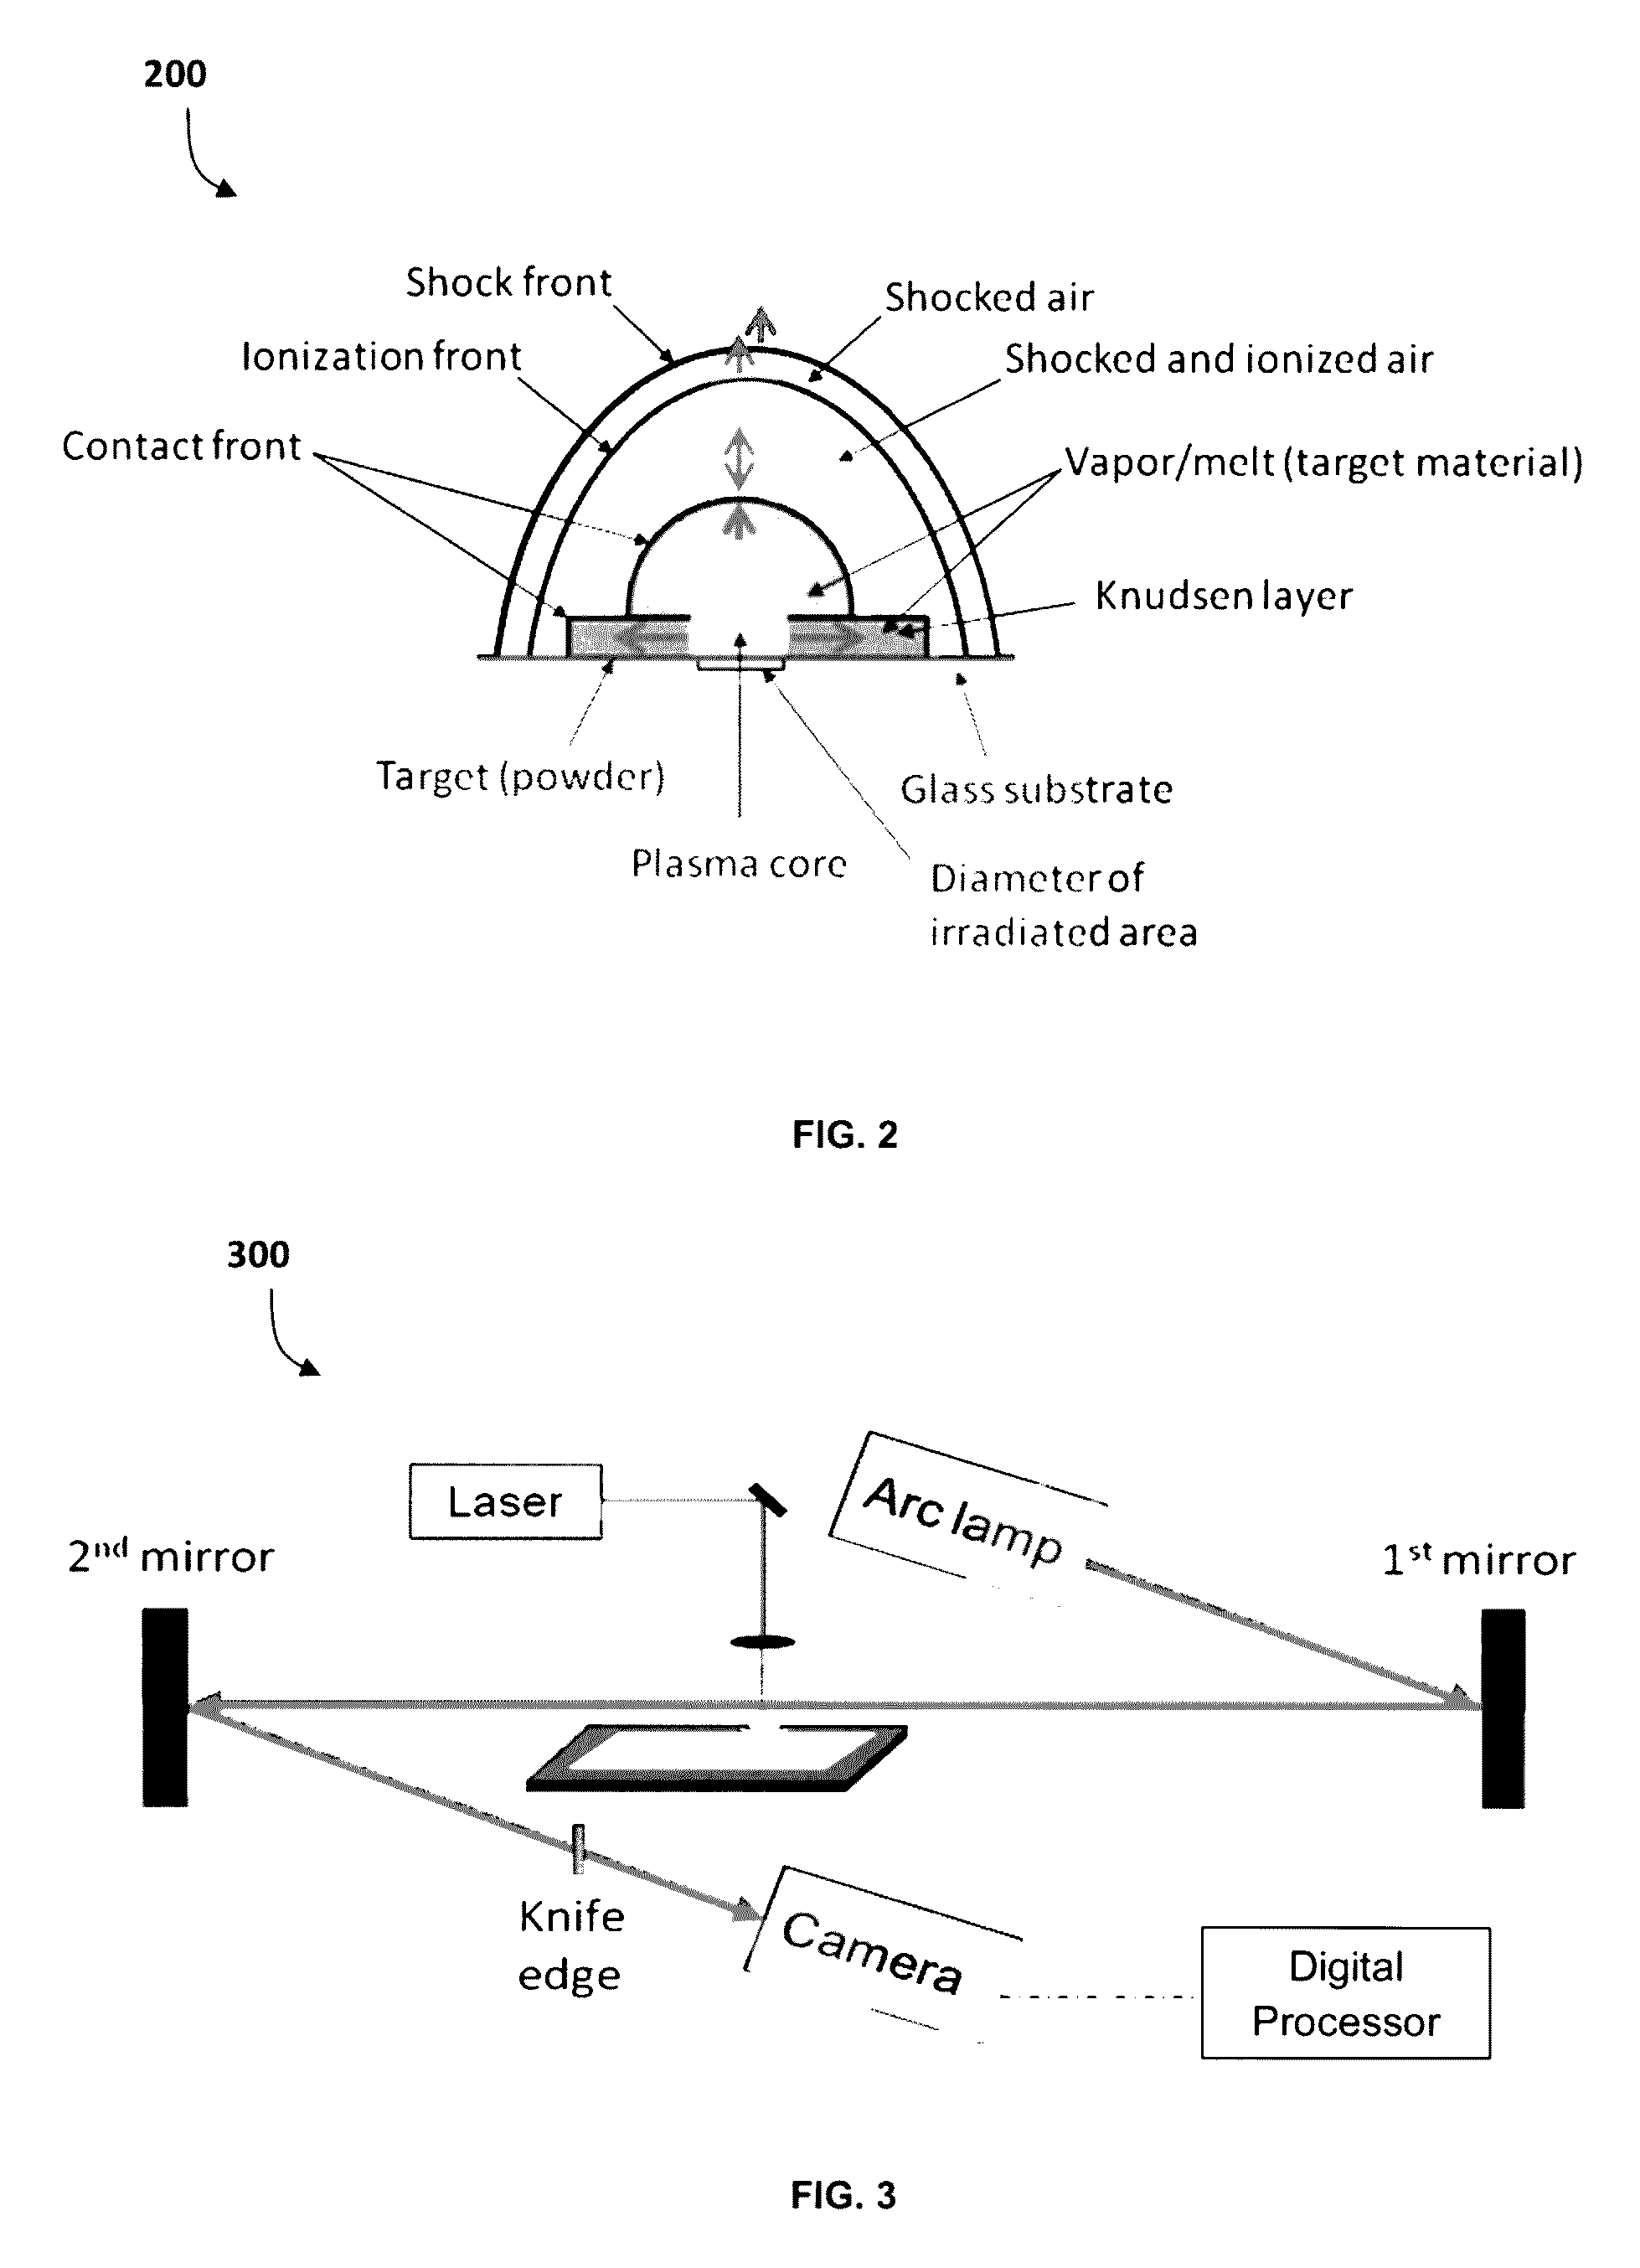 Method for estimating detonation performance of materials